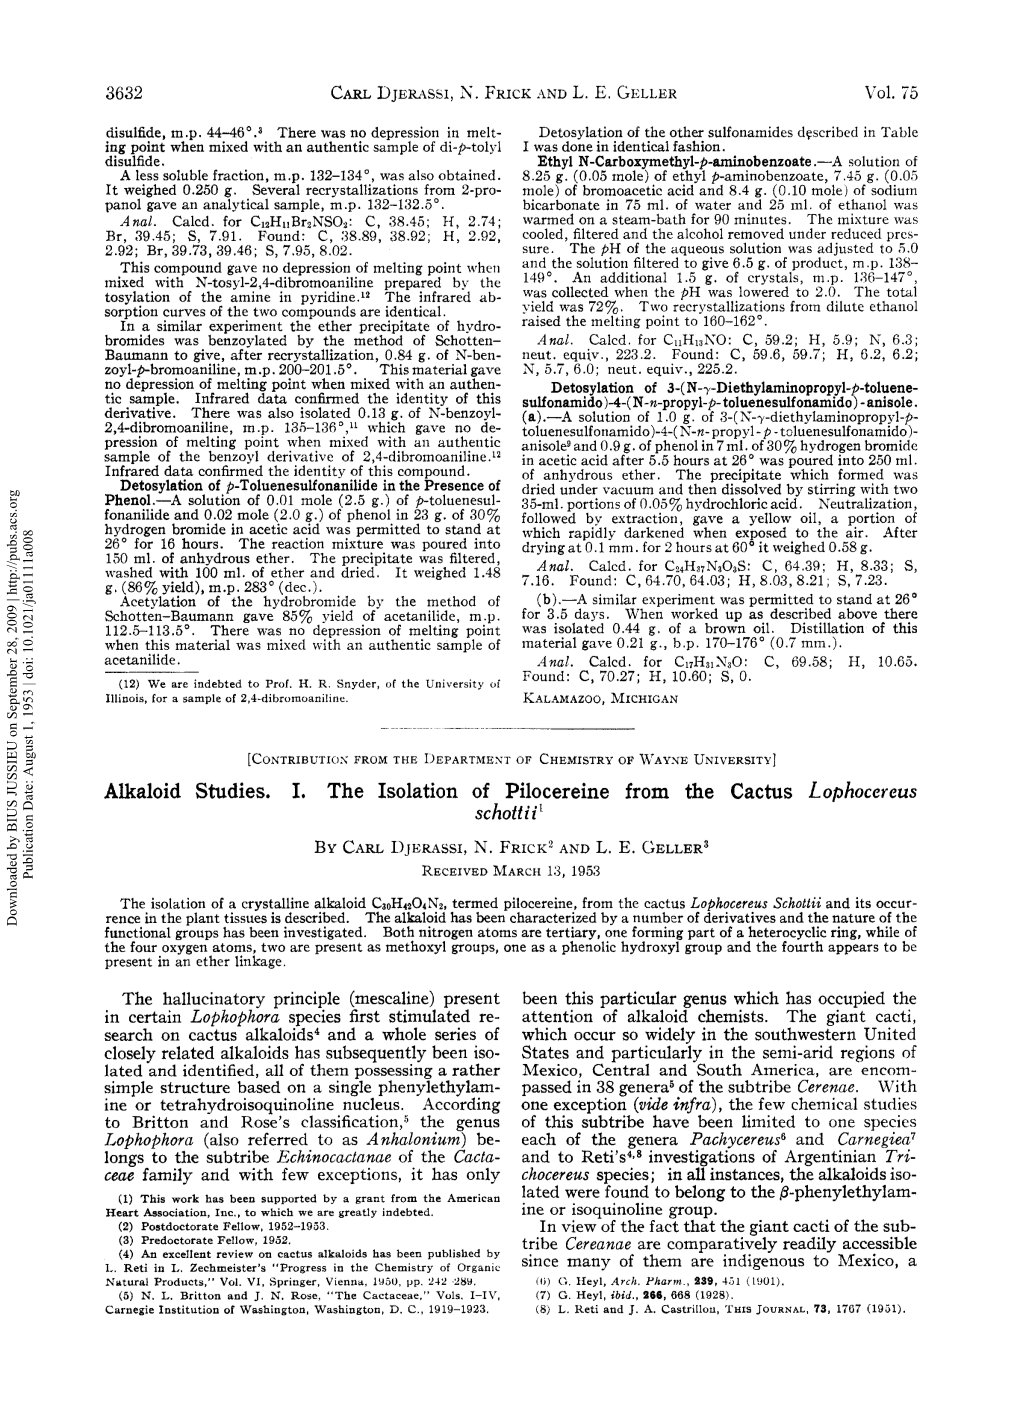 Alkaloid Studies. I. the Isolation of Pilocereine from the Cactus Lophocereus Schottii'